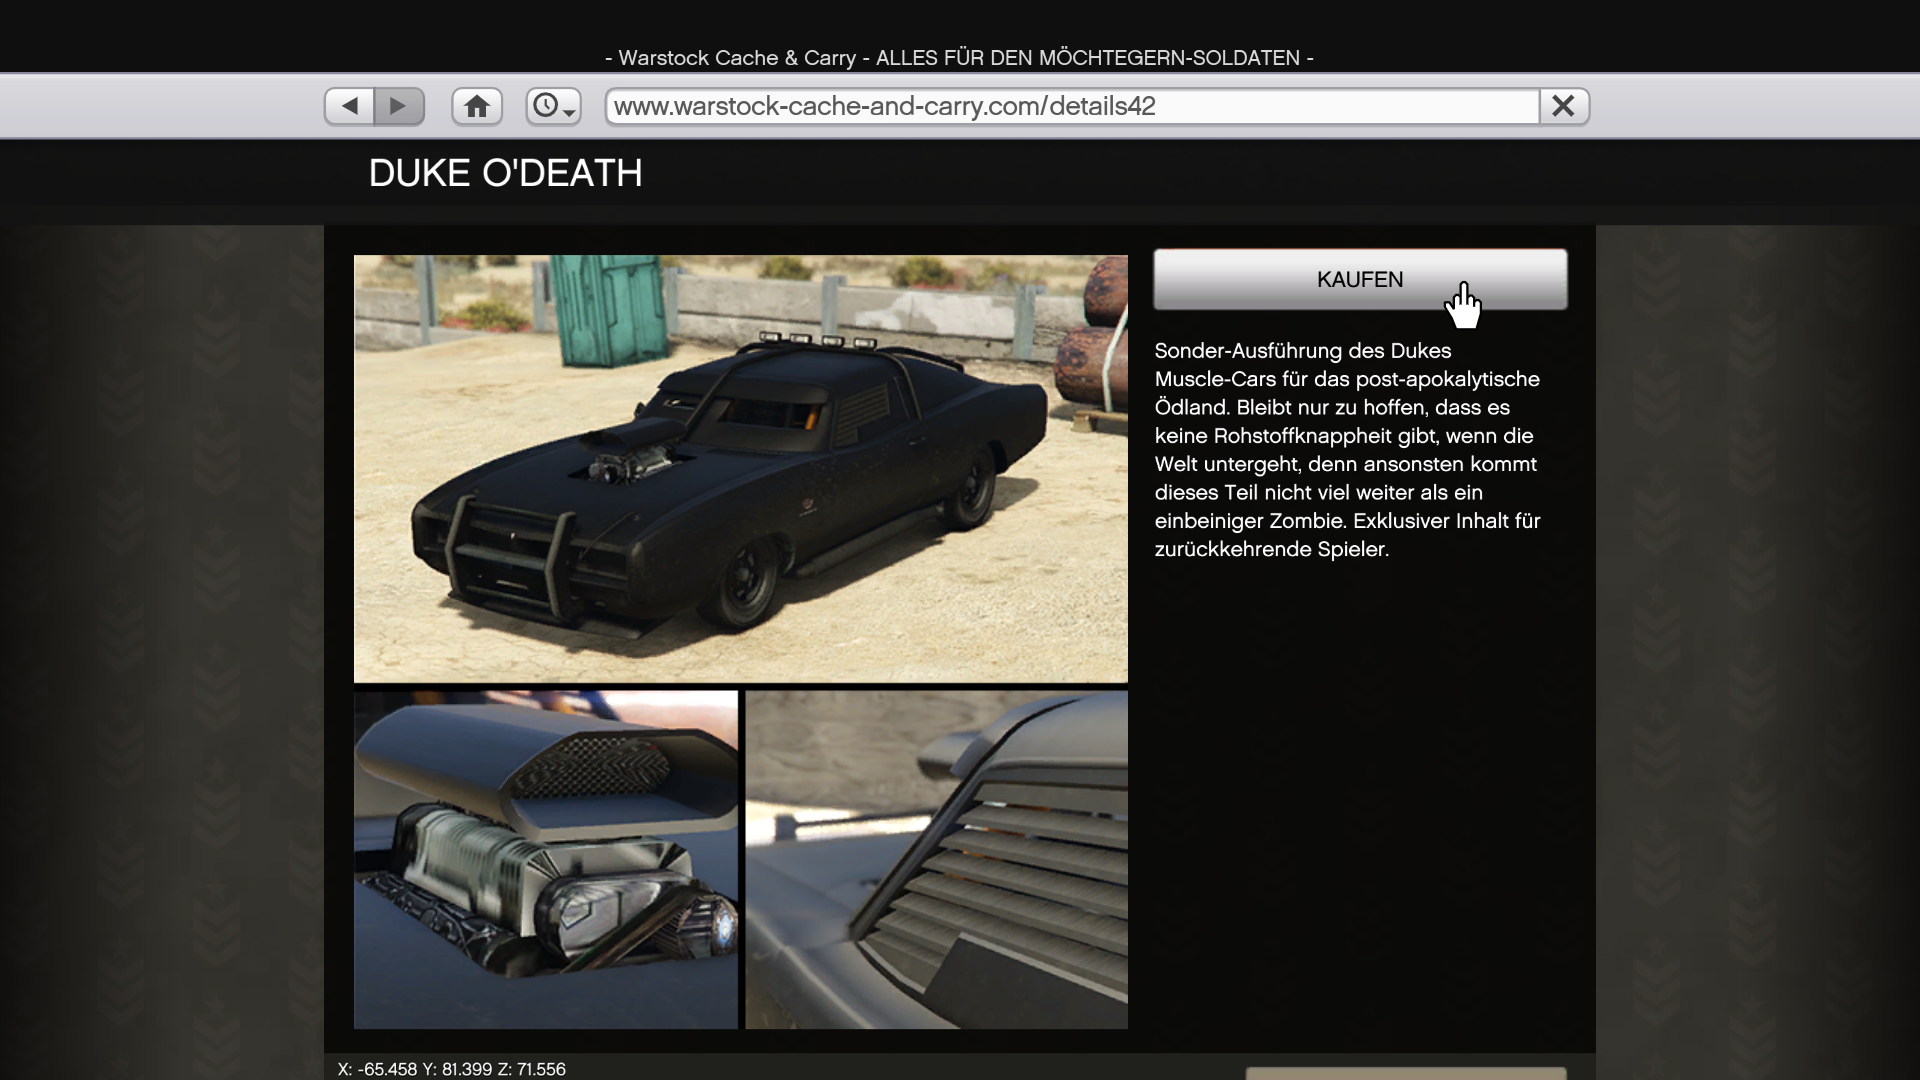 GTA 5 Script Mods - GTA Online Apartments & Vehicles in Single Player 